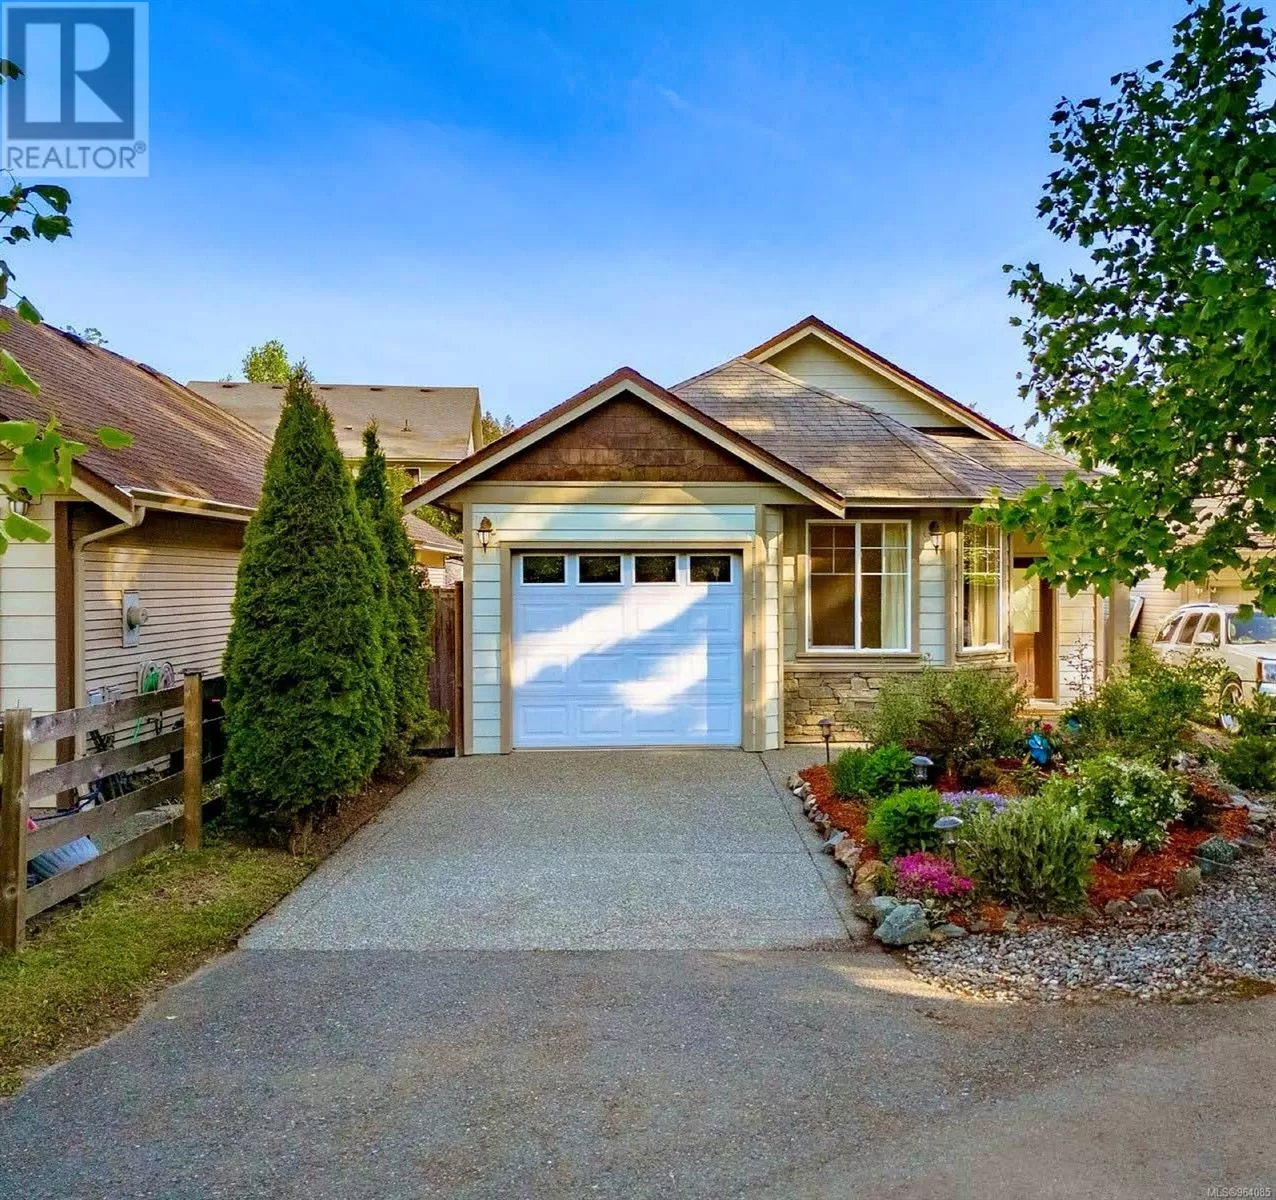 House for rent: 992 Wild Pond Lane, Langford, British Columbia V9C 4M7